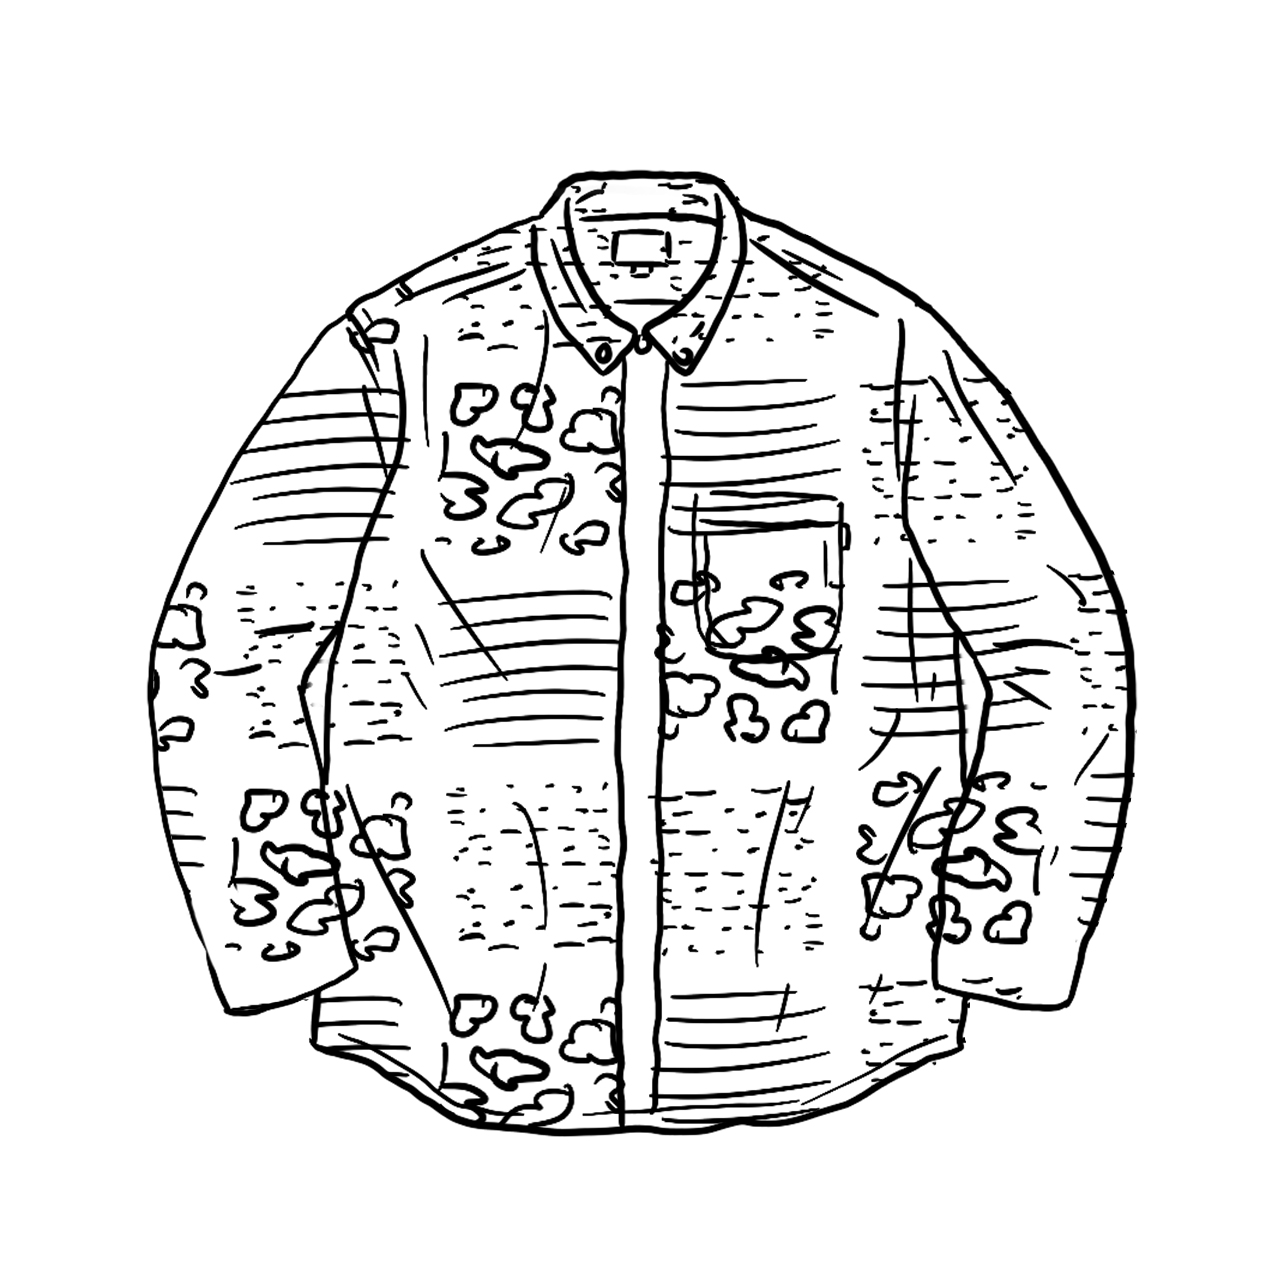 Supreme Paisley Grid Shirt Magenta